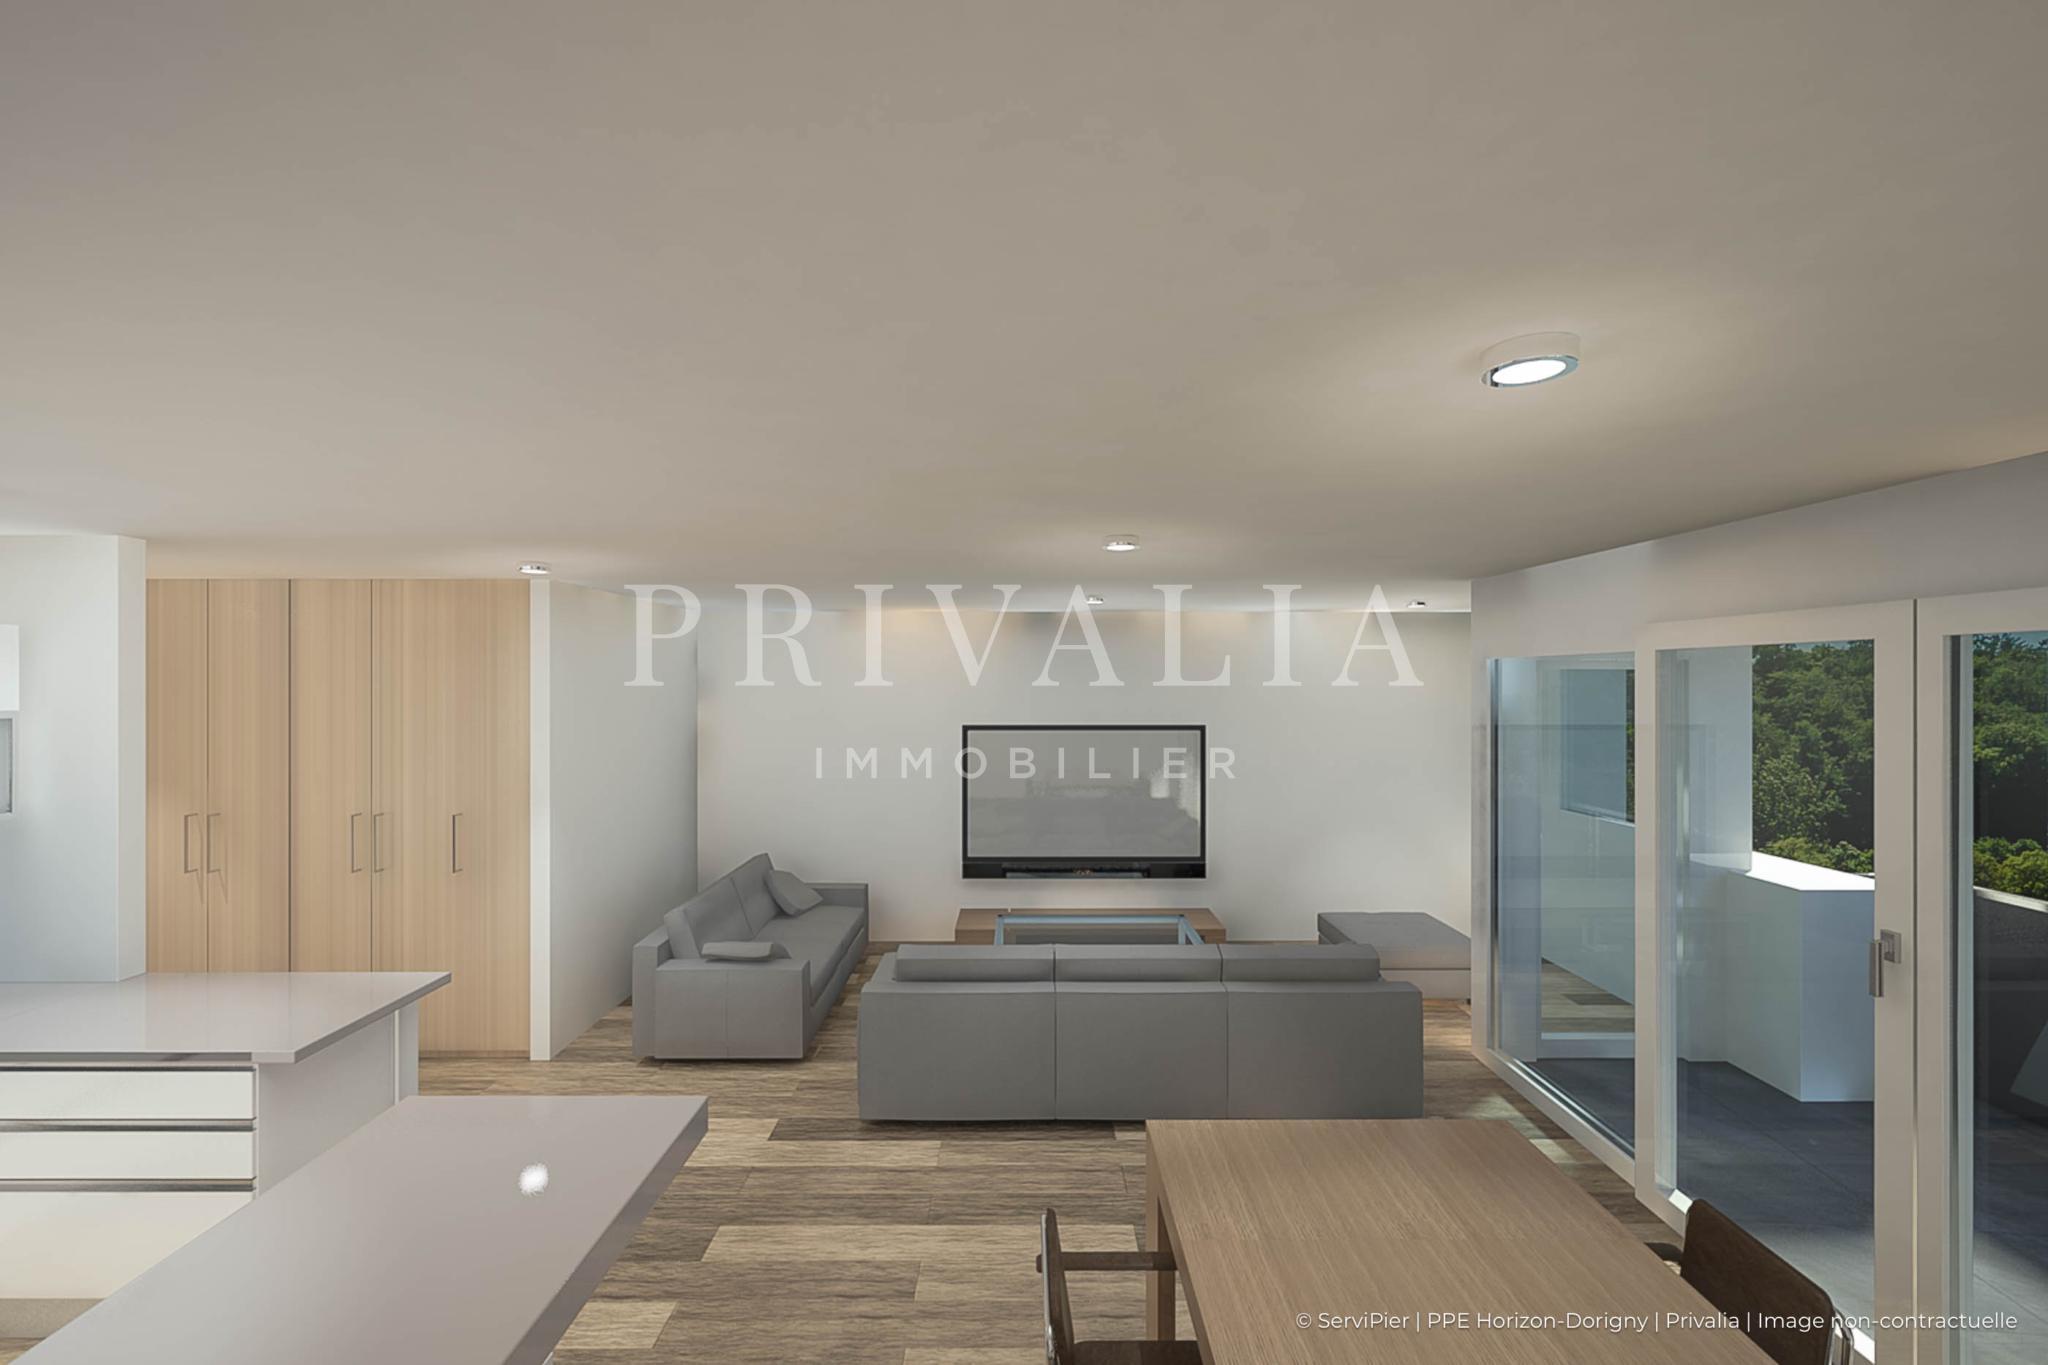 PrivaliaProjet neuf : 3 pièces avec balcon / chantier ouvert